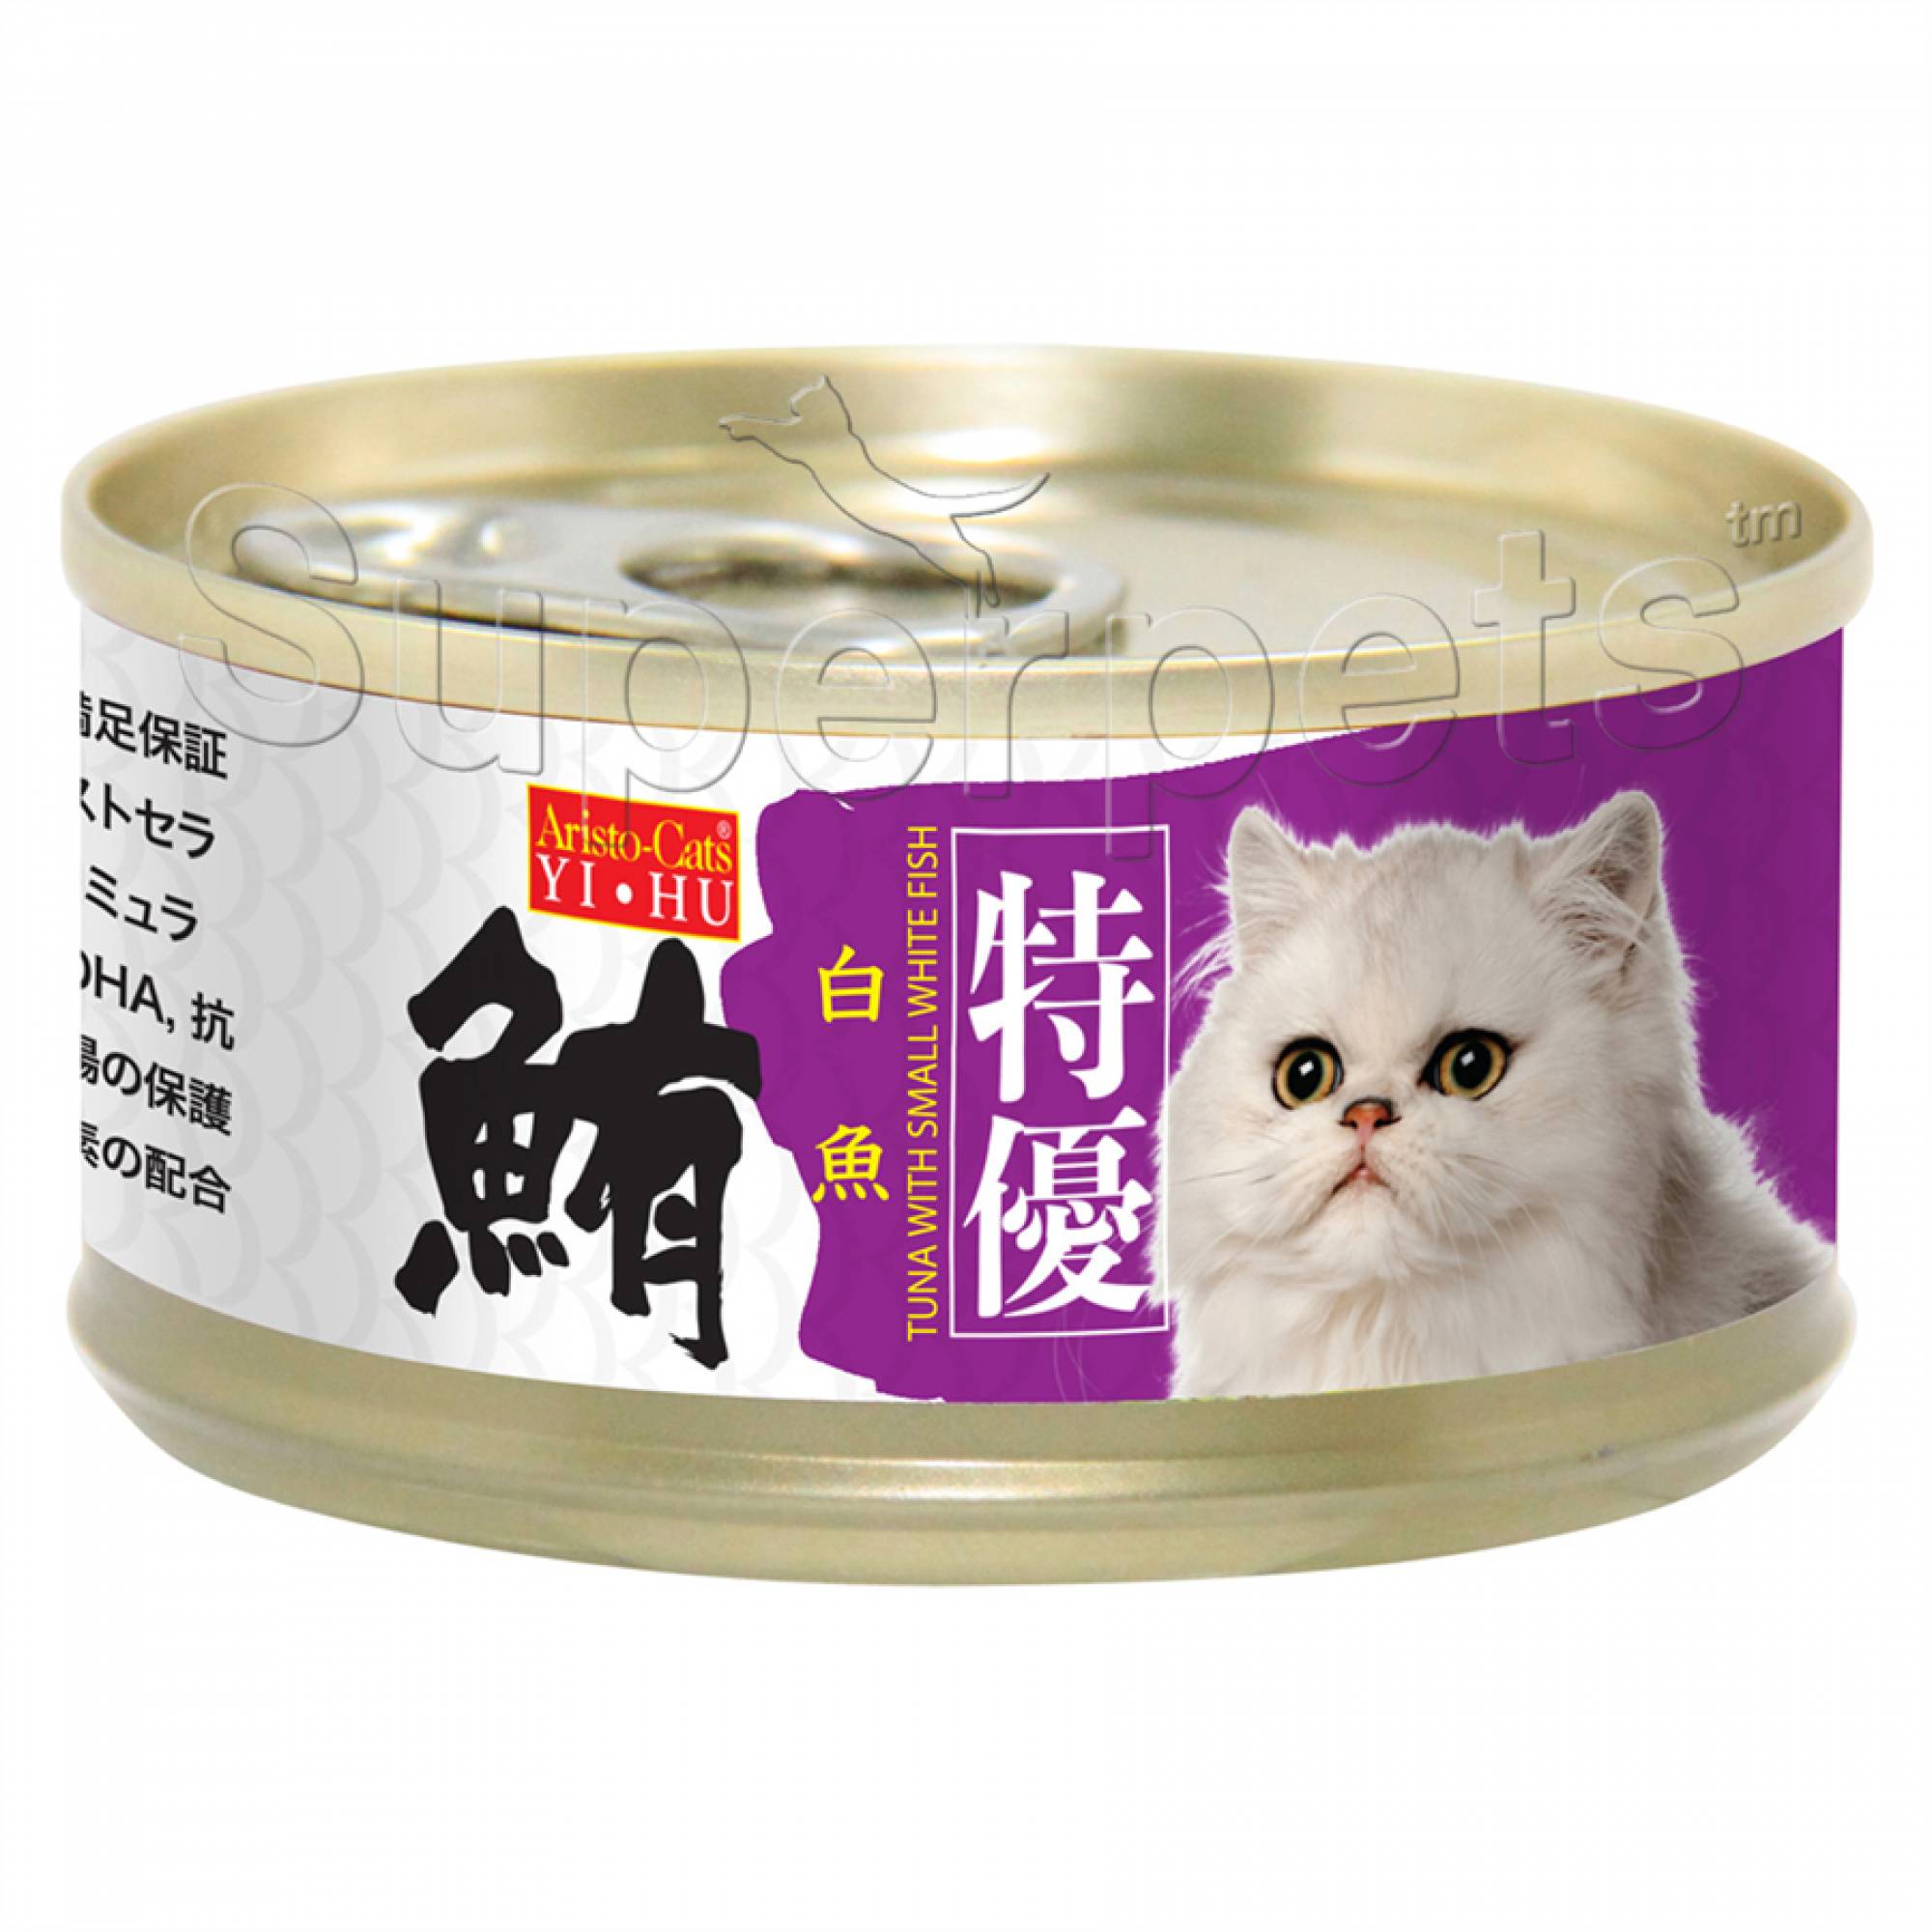 Aristo-Cats - Premium Plus (Export) - Tuna with Small White Fish 80g